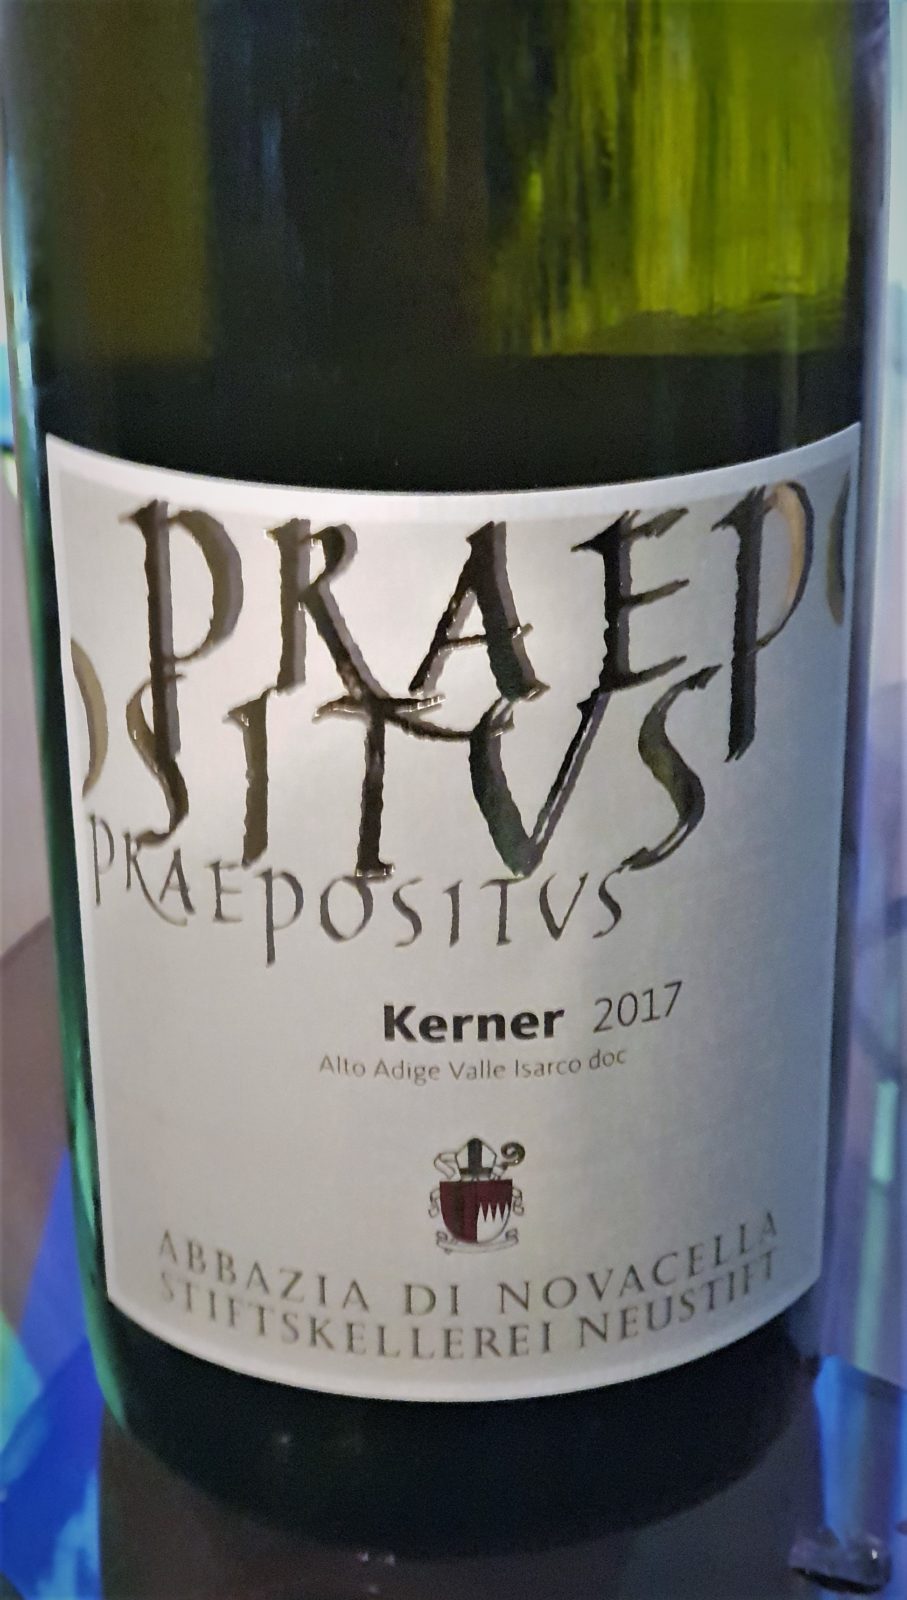 Kerner “Praepositus” 2017